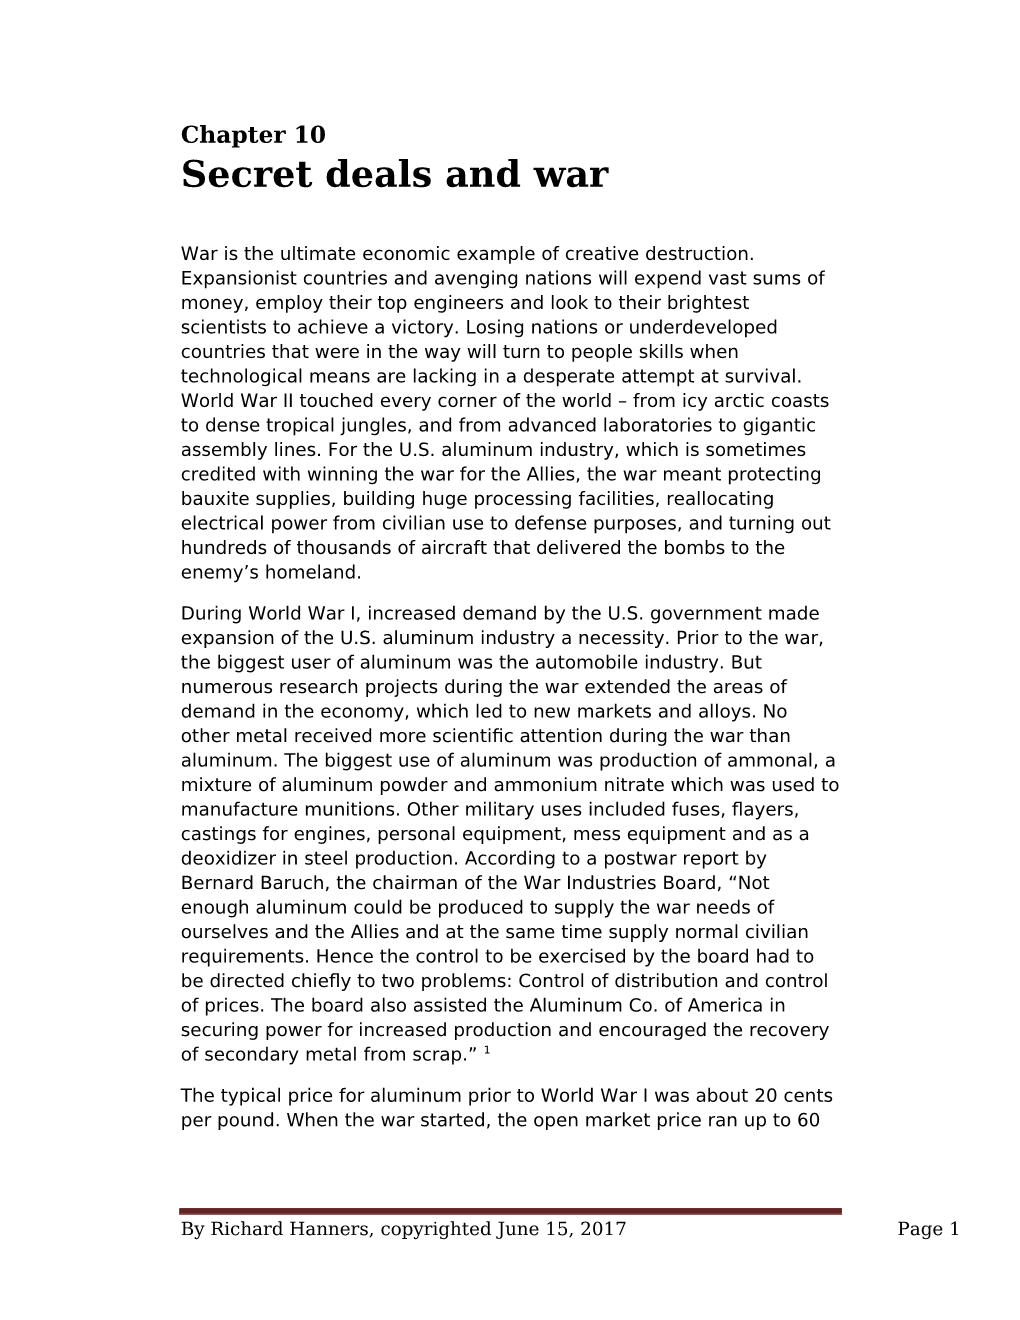 Chapter 10 – Secret Deals And